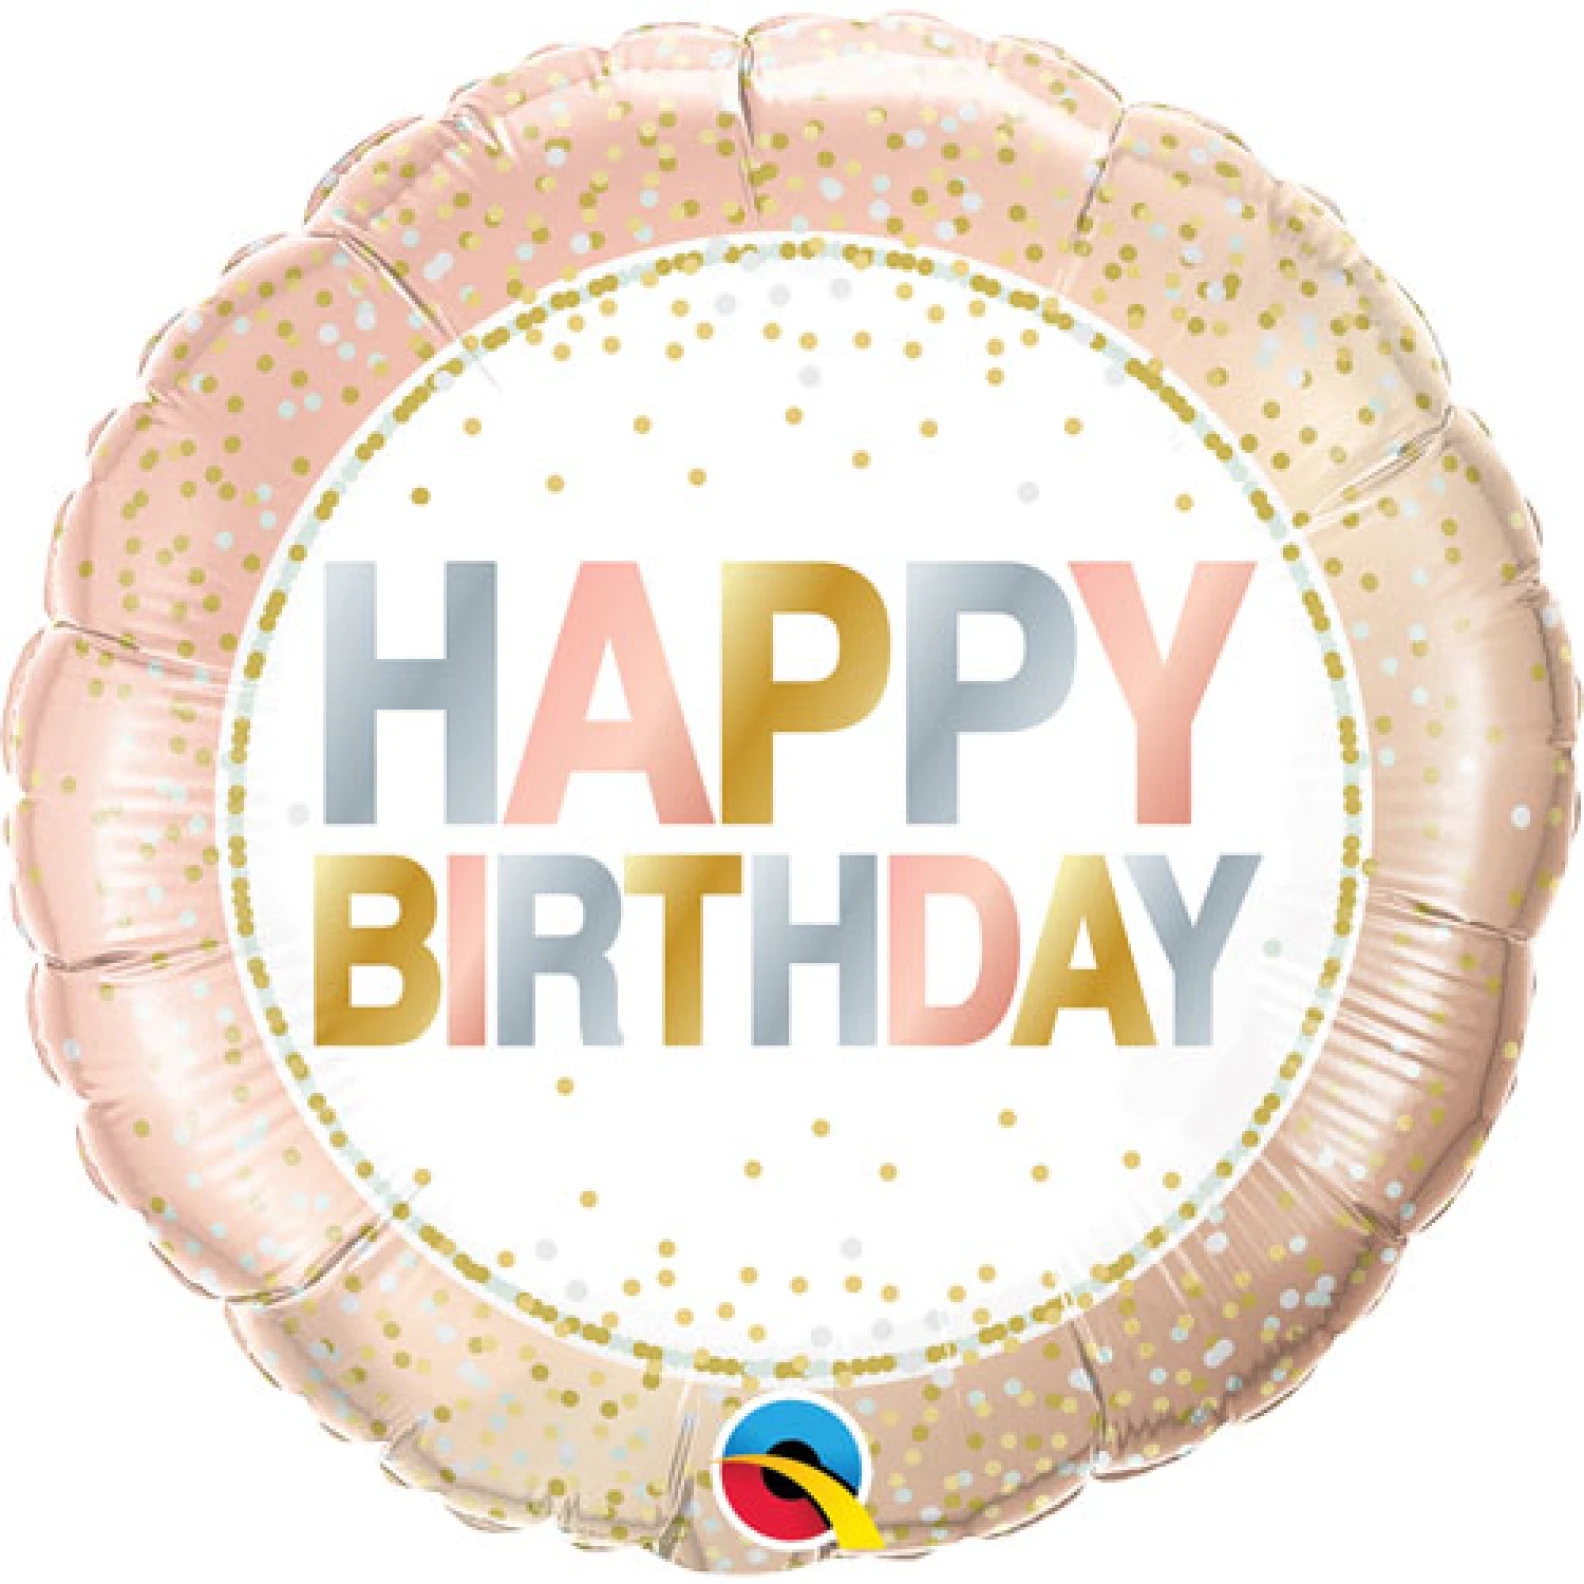 Happy Birthday Metallic Foil Balloon - image №1